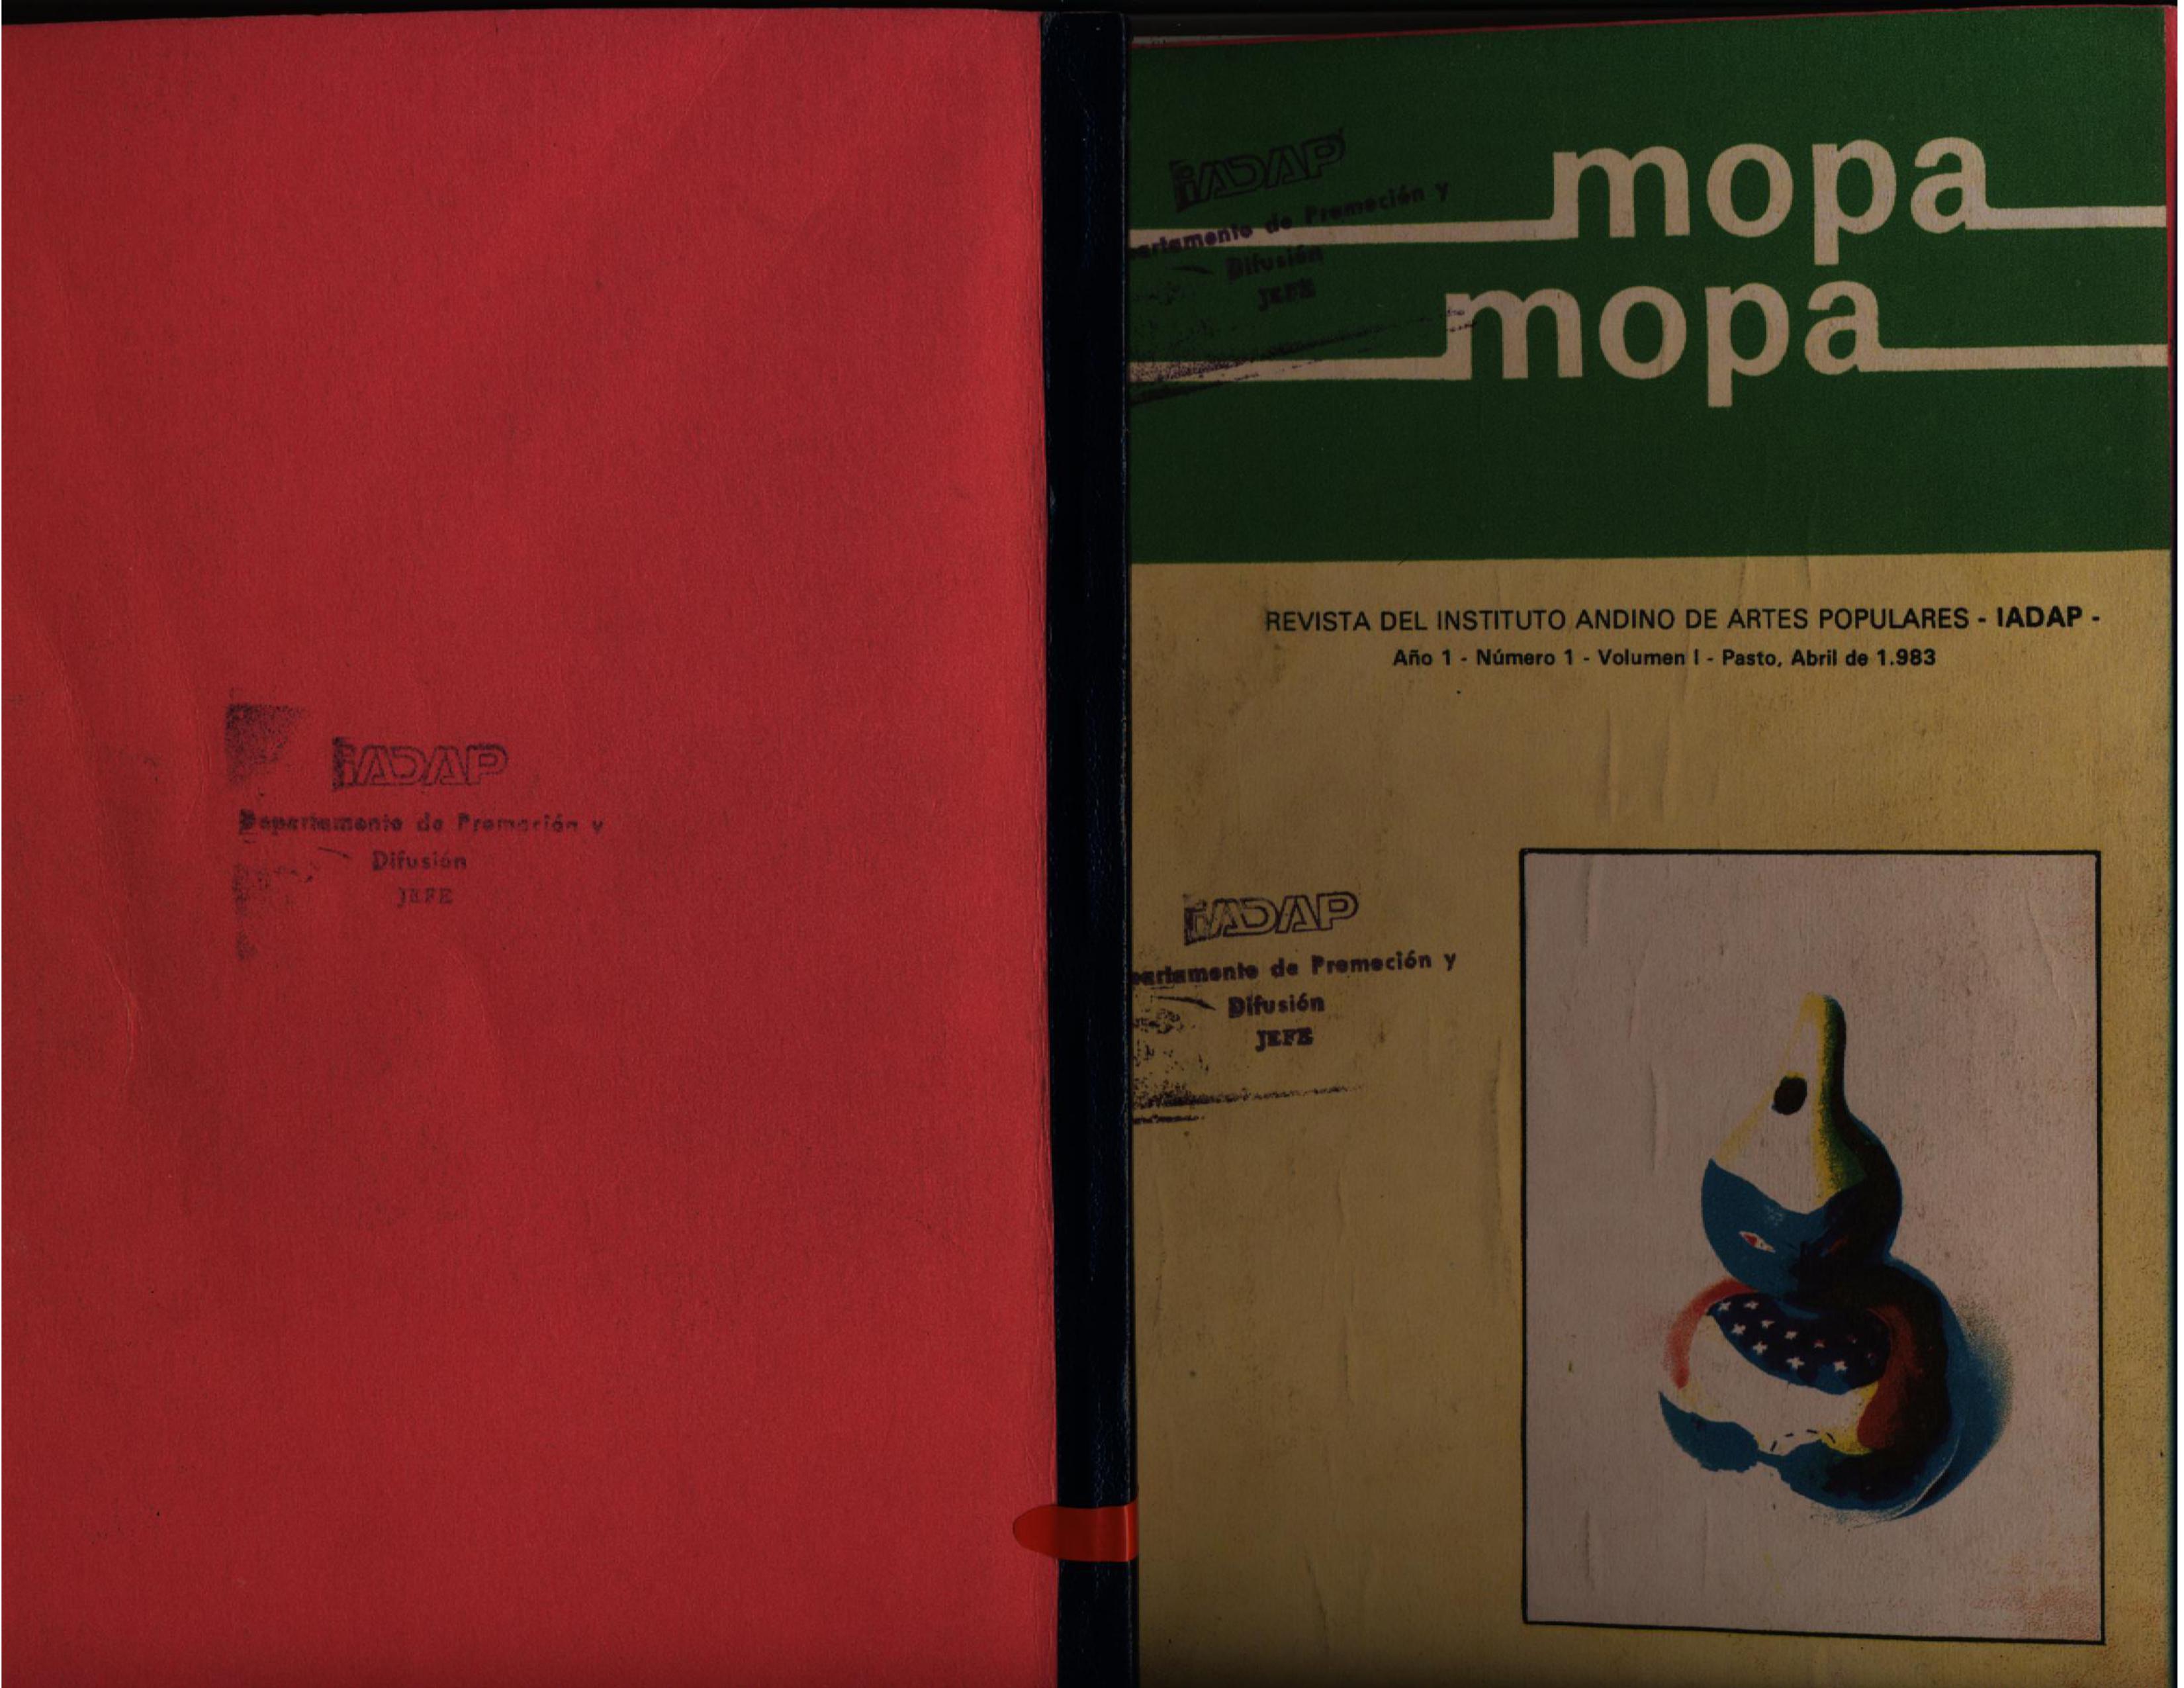 					Ver Vol. 1 Núm. 1 (1983): Revista Mopa Mopa No. 1
				